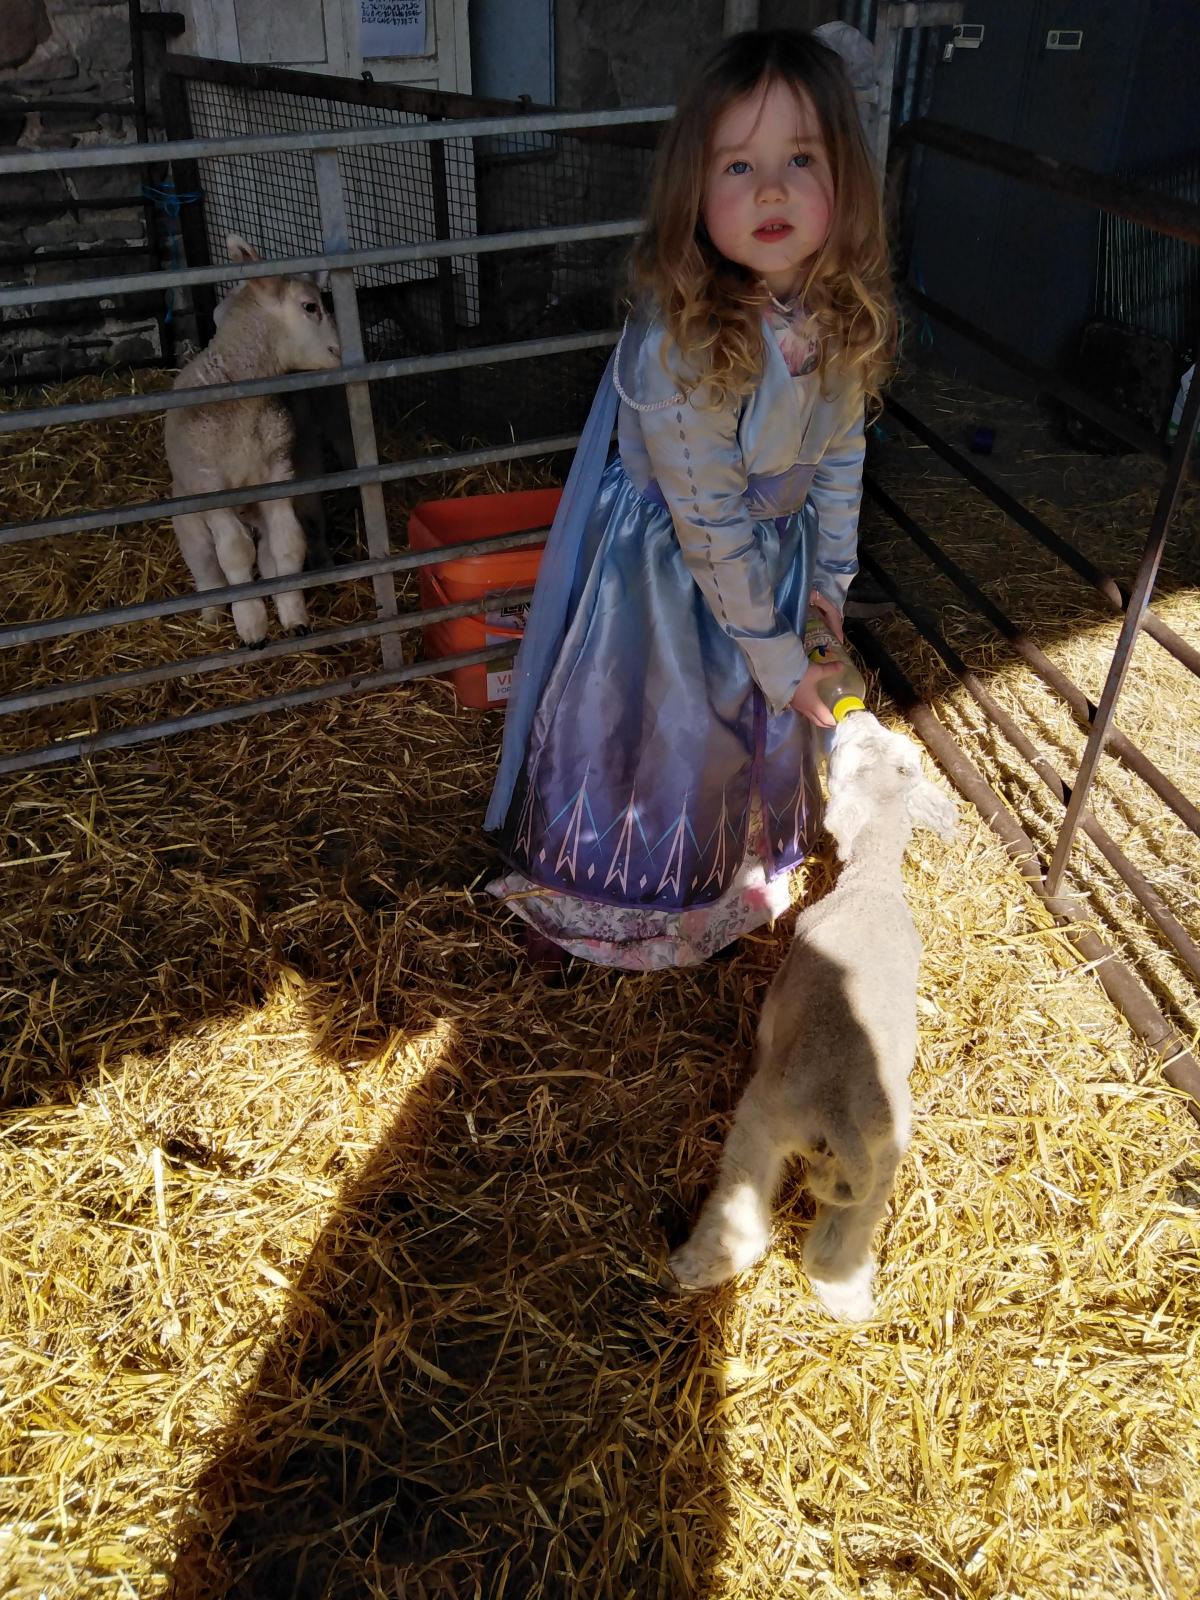 Lisa McWilliam - Our daughter Sophie Walls (3) feeding the pet lambs in her elsa princess dress.